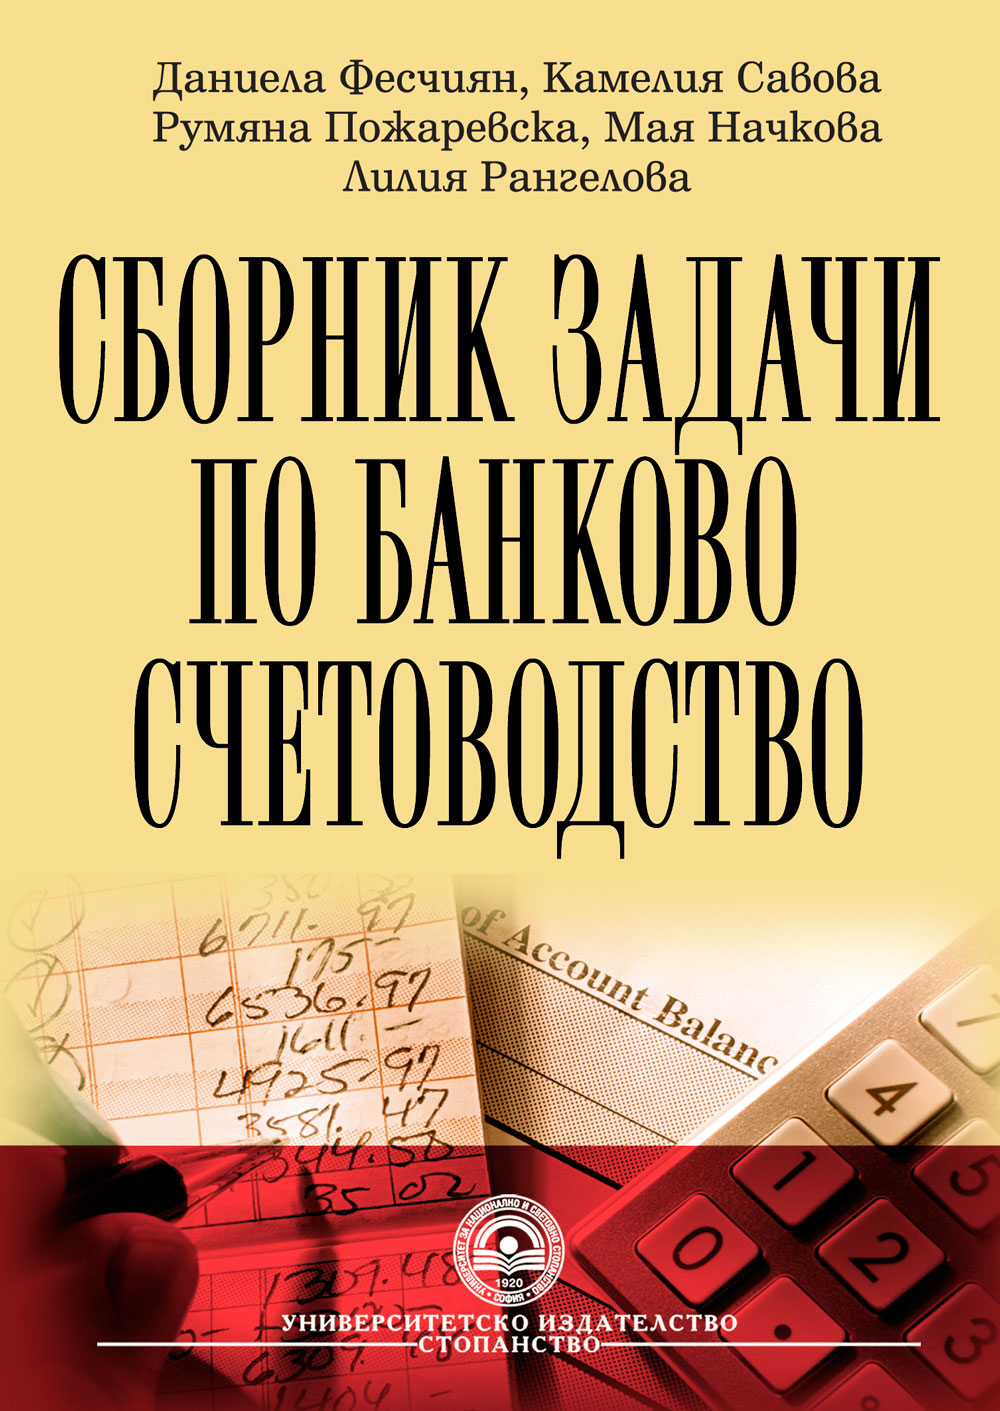 http://books.unwe.bg/wp-content/uploads/2016/01/Bankovo_schetovodstvo-SBORNIK-ZADACHI_2009.jpg